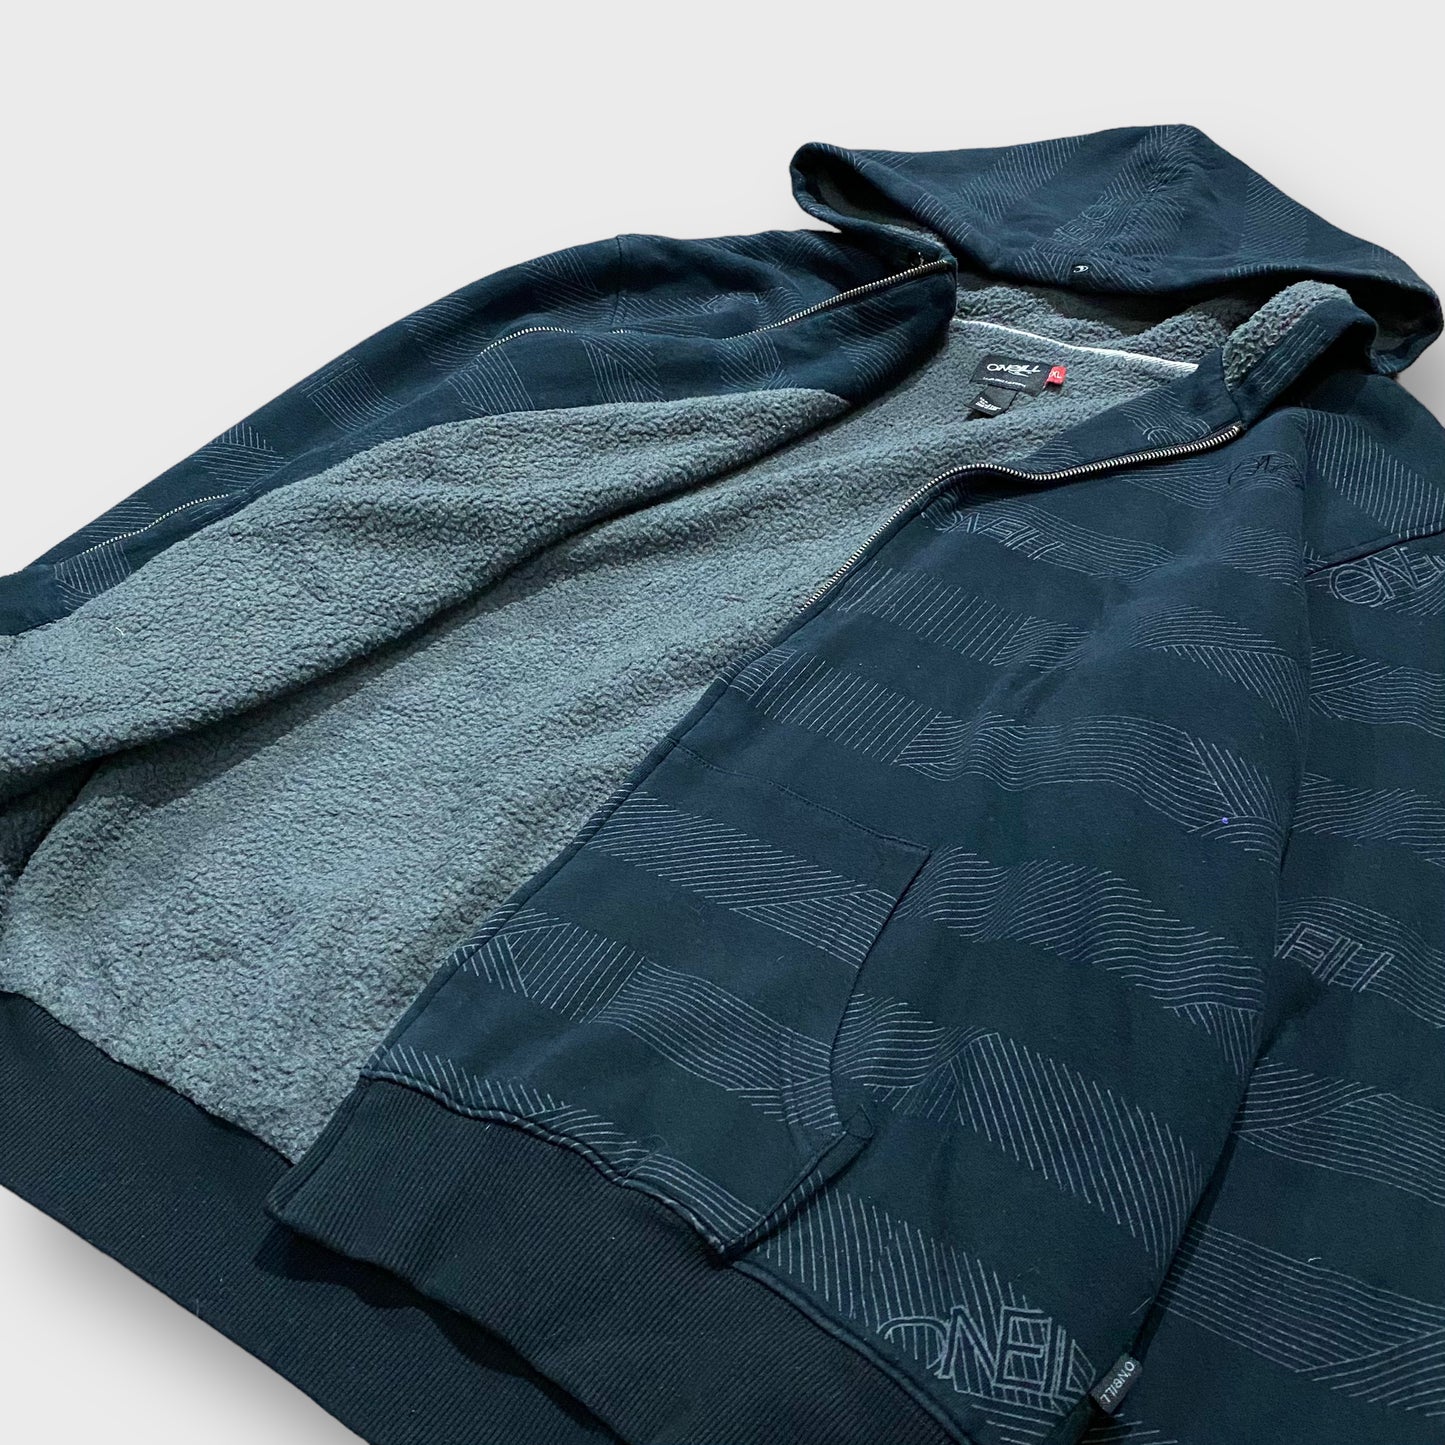 "O'NEILL" Border pattern full zip hoodie